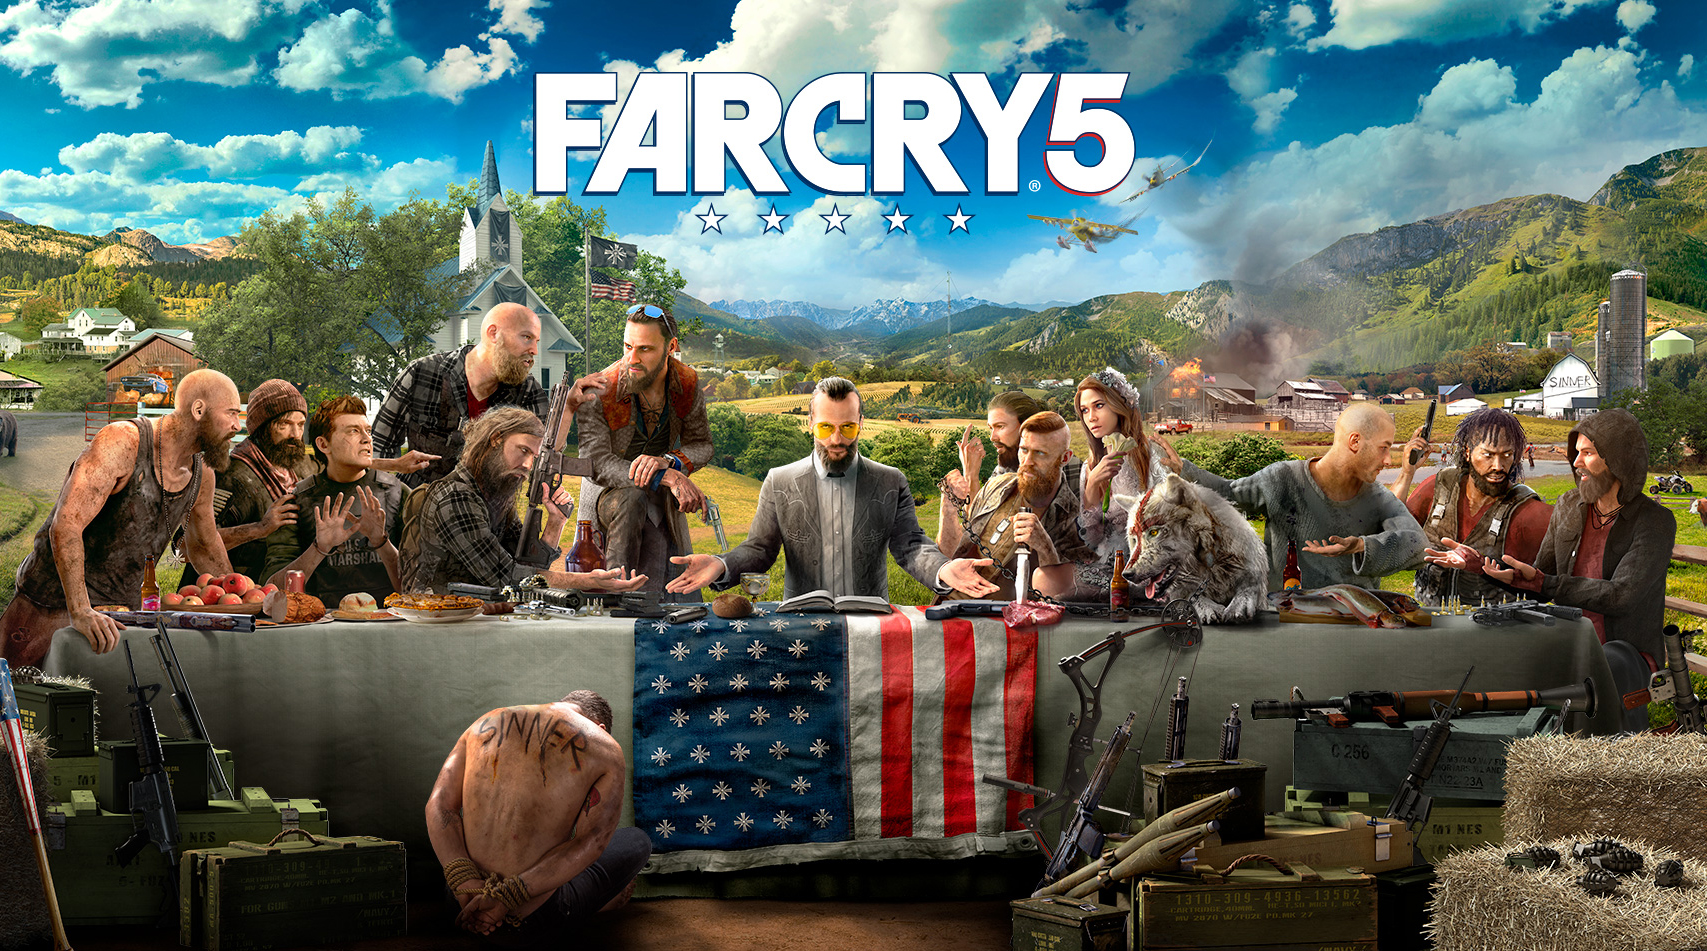 farcry5 เช็คสเปกด่วน!!! Ubisoft ประกาศสเปกเกมส์ FARCRY 5 เวอร์ชั่น PC ในรายละเอียดความต้องการของระบบต่างๆ